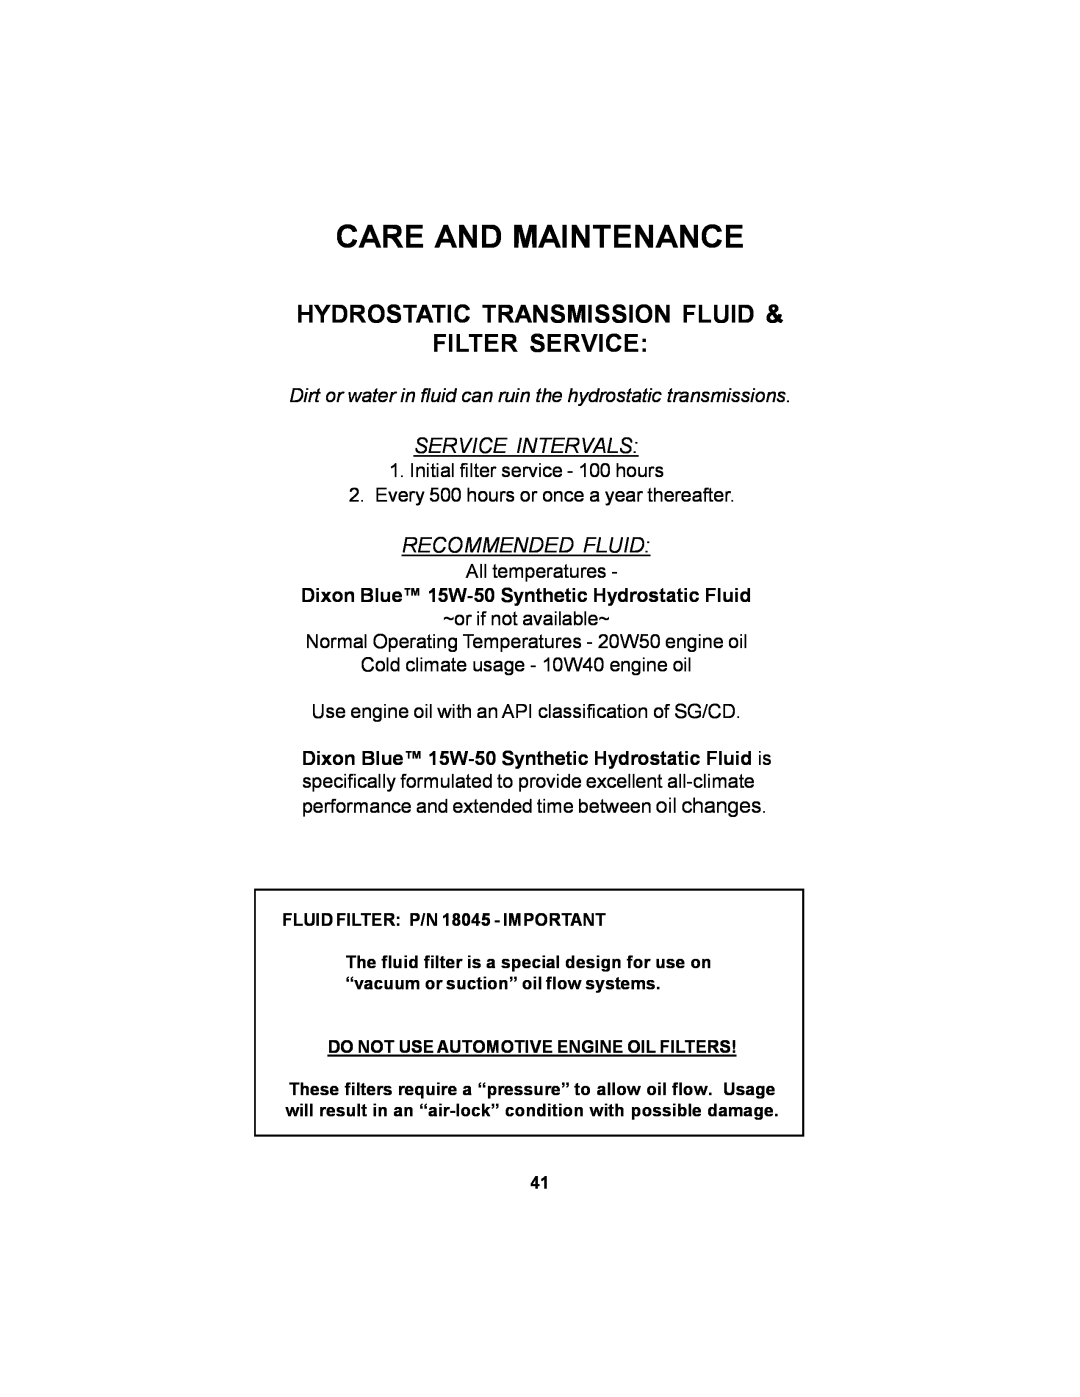 Dixon 11249-106 manual Hydrostatic Transmission Fluid & Filter Service, Care And Maintenance, Service Intervals 